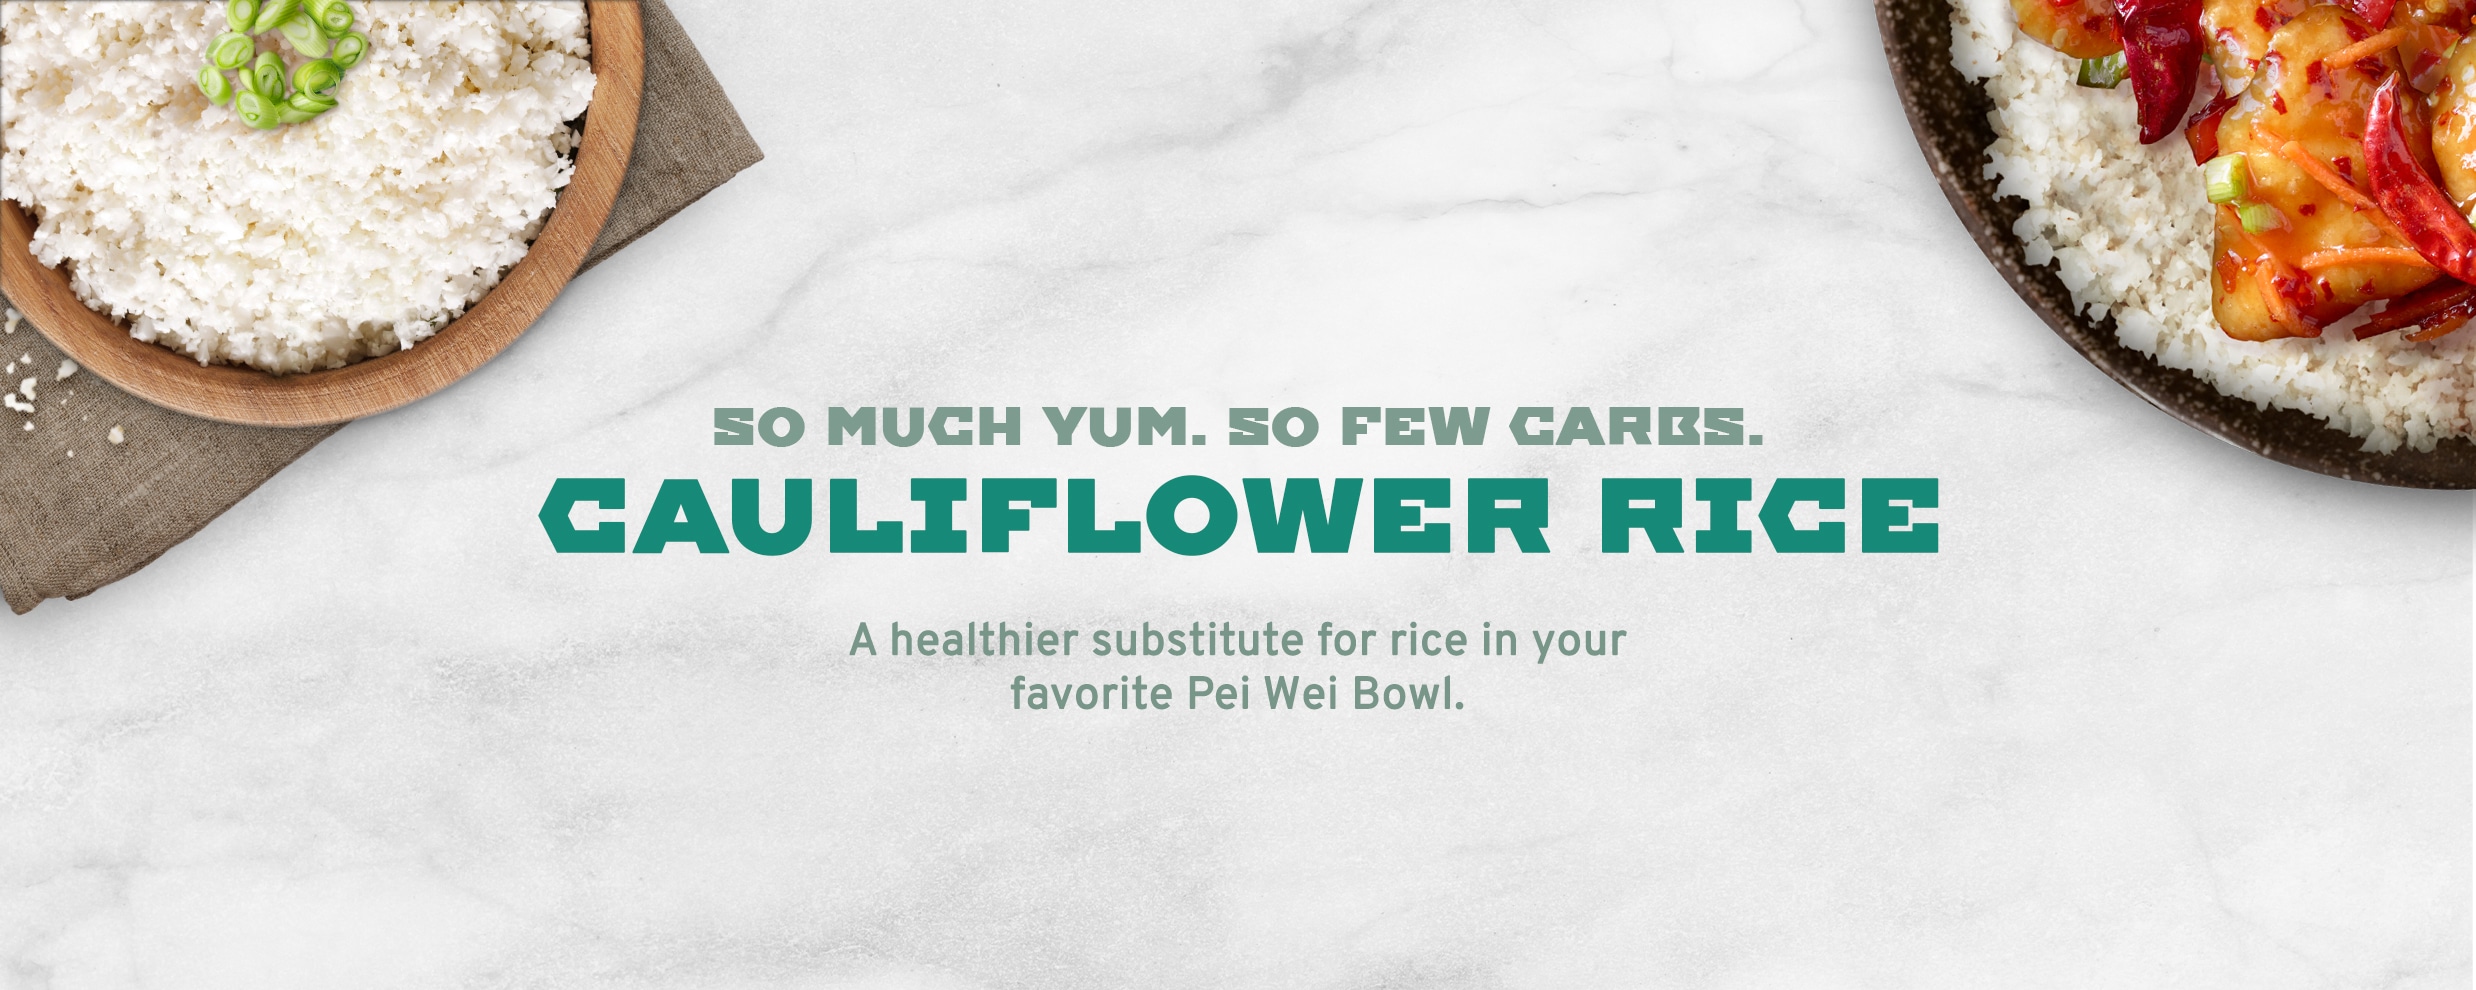 cauliflower rice landingpage desktop